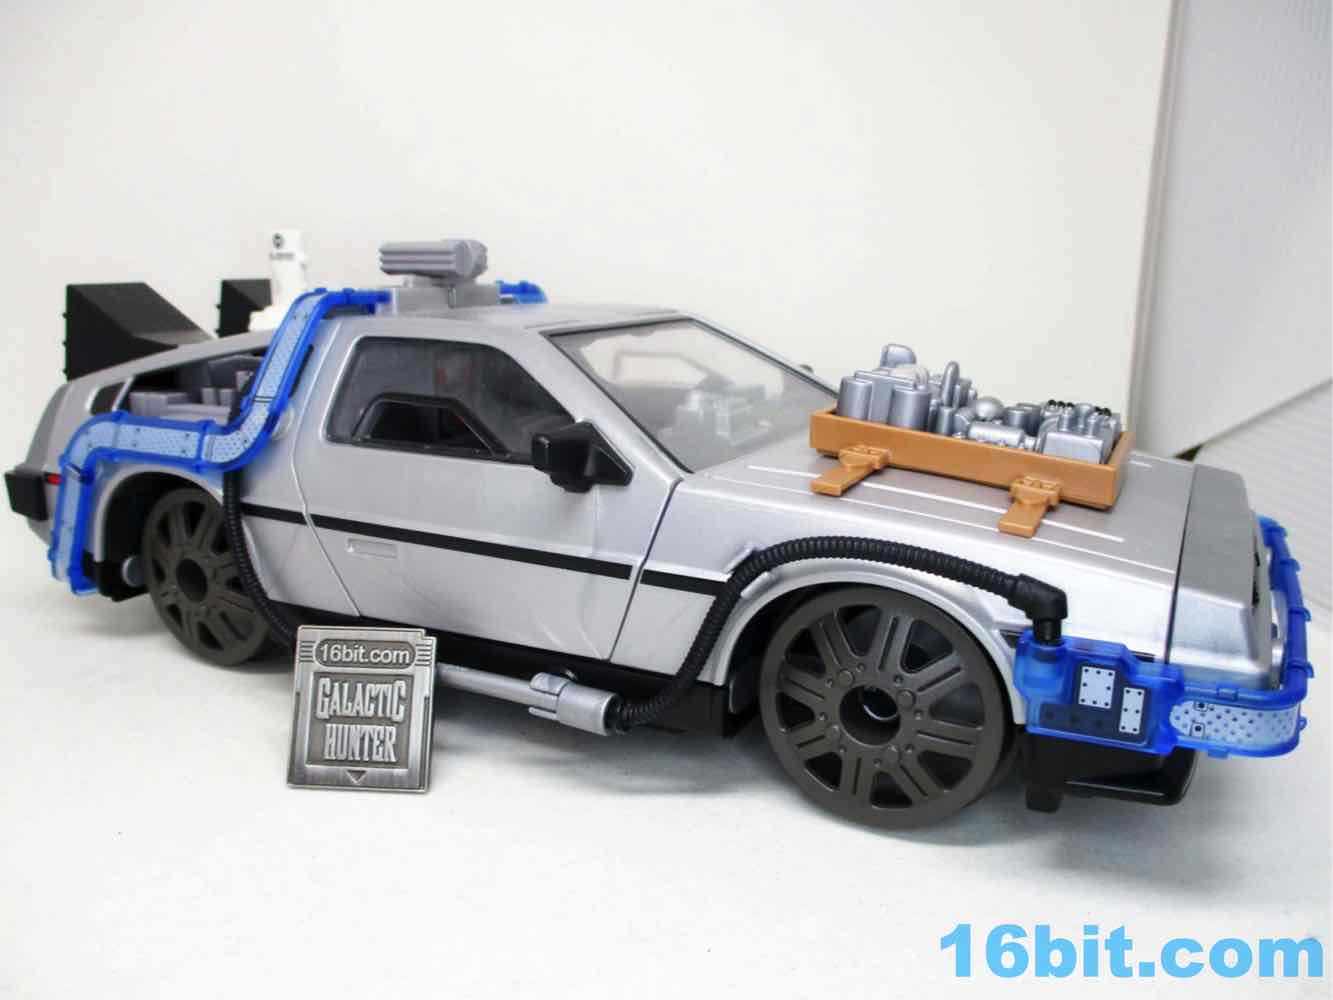 Playmobil Marty McFly Retour vers le Futur 3 70576